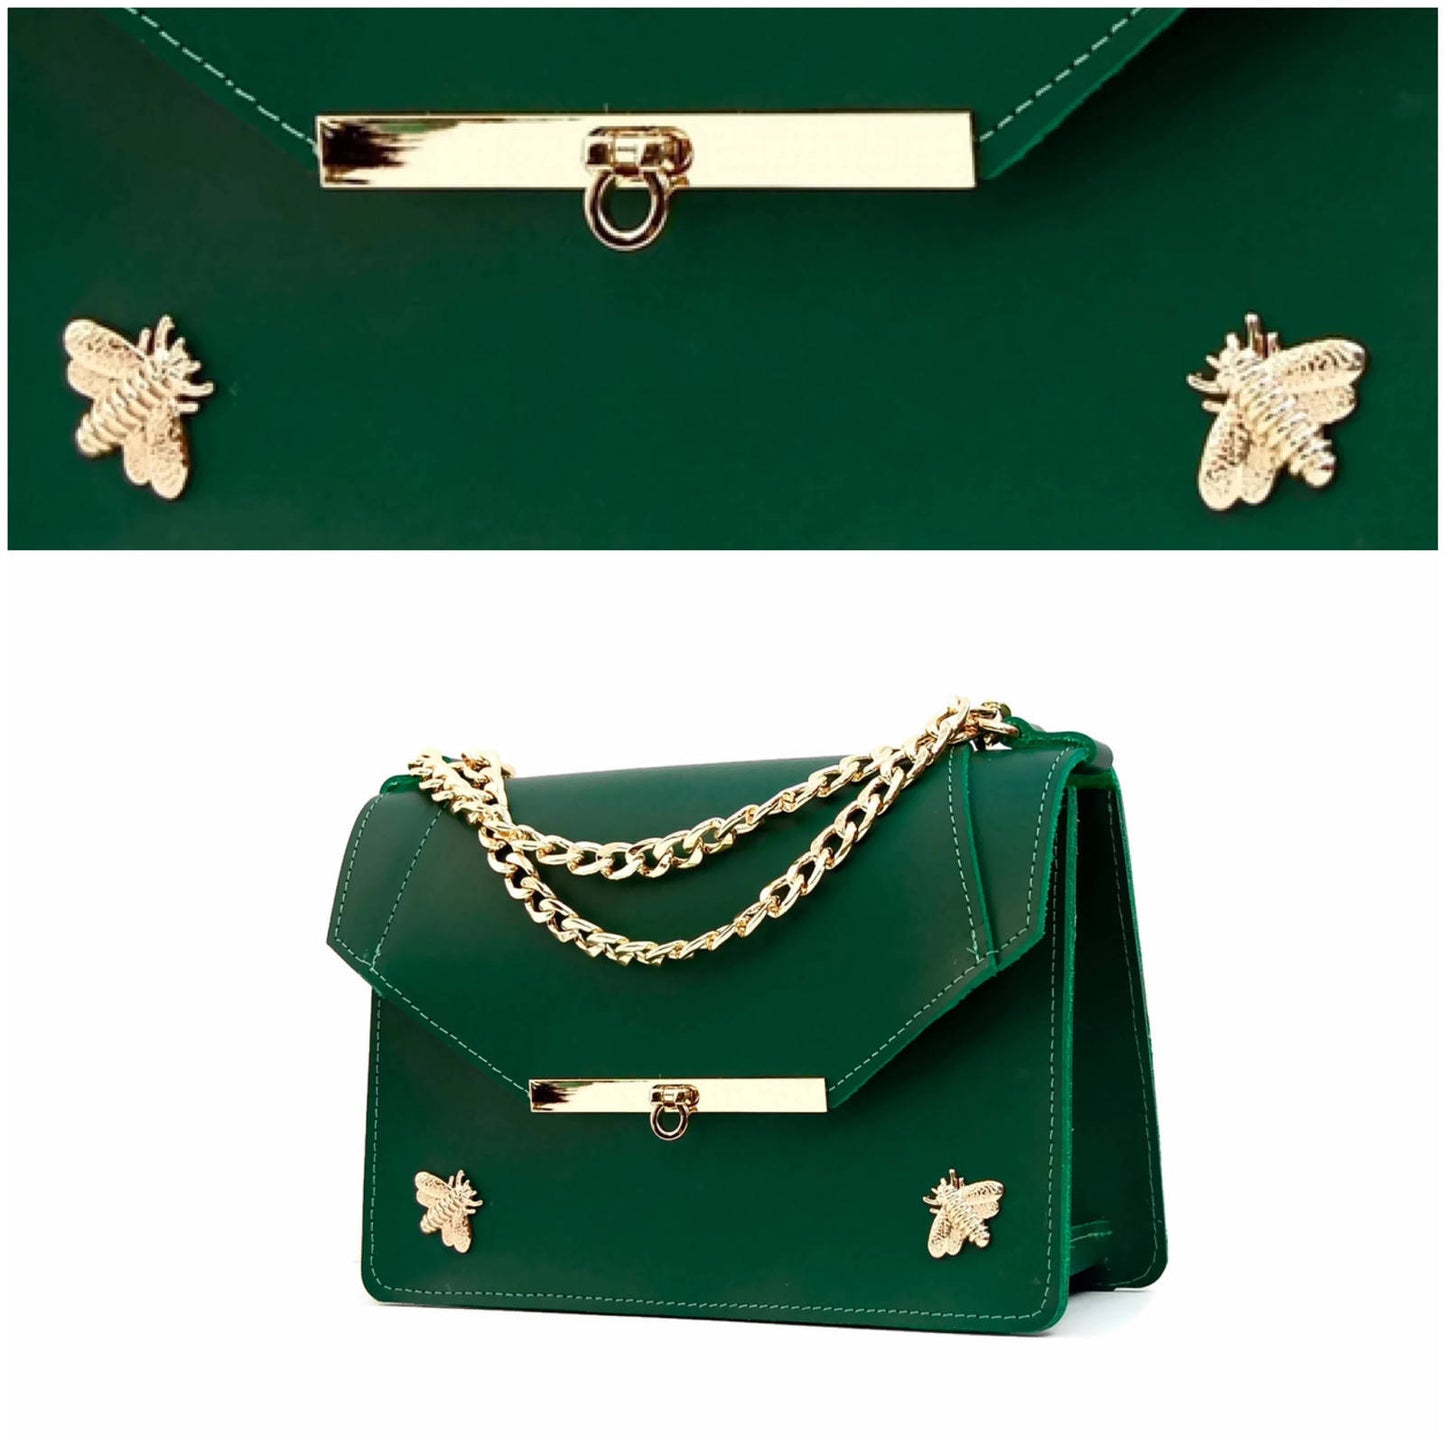 Gavi shoulder bag in emerald green